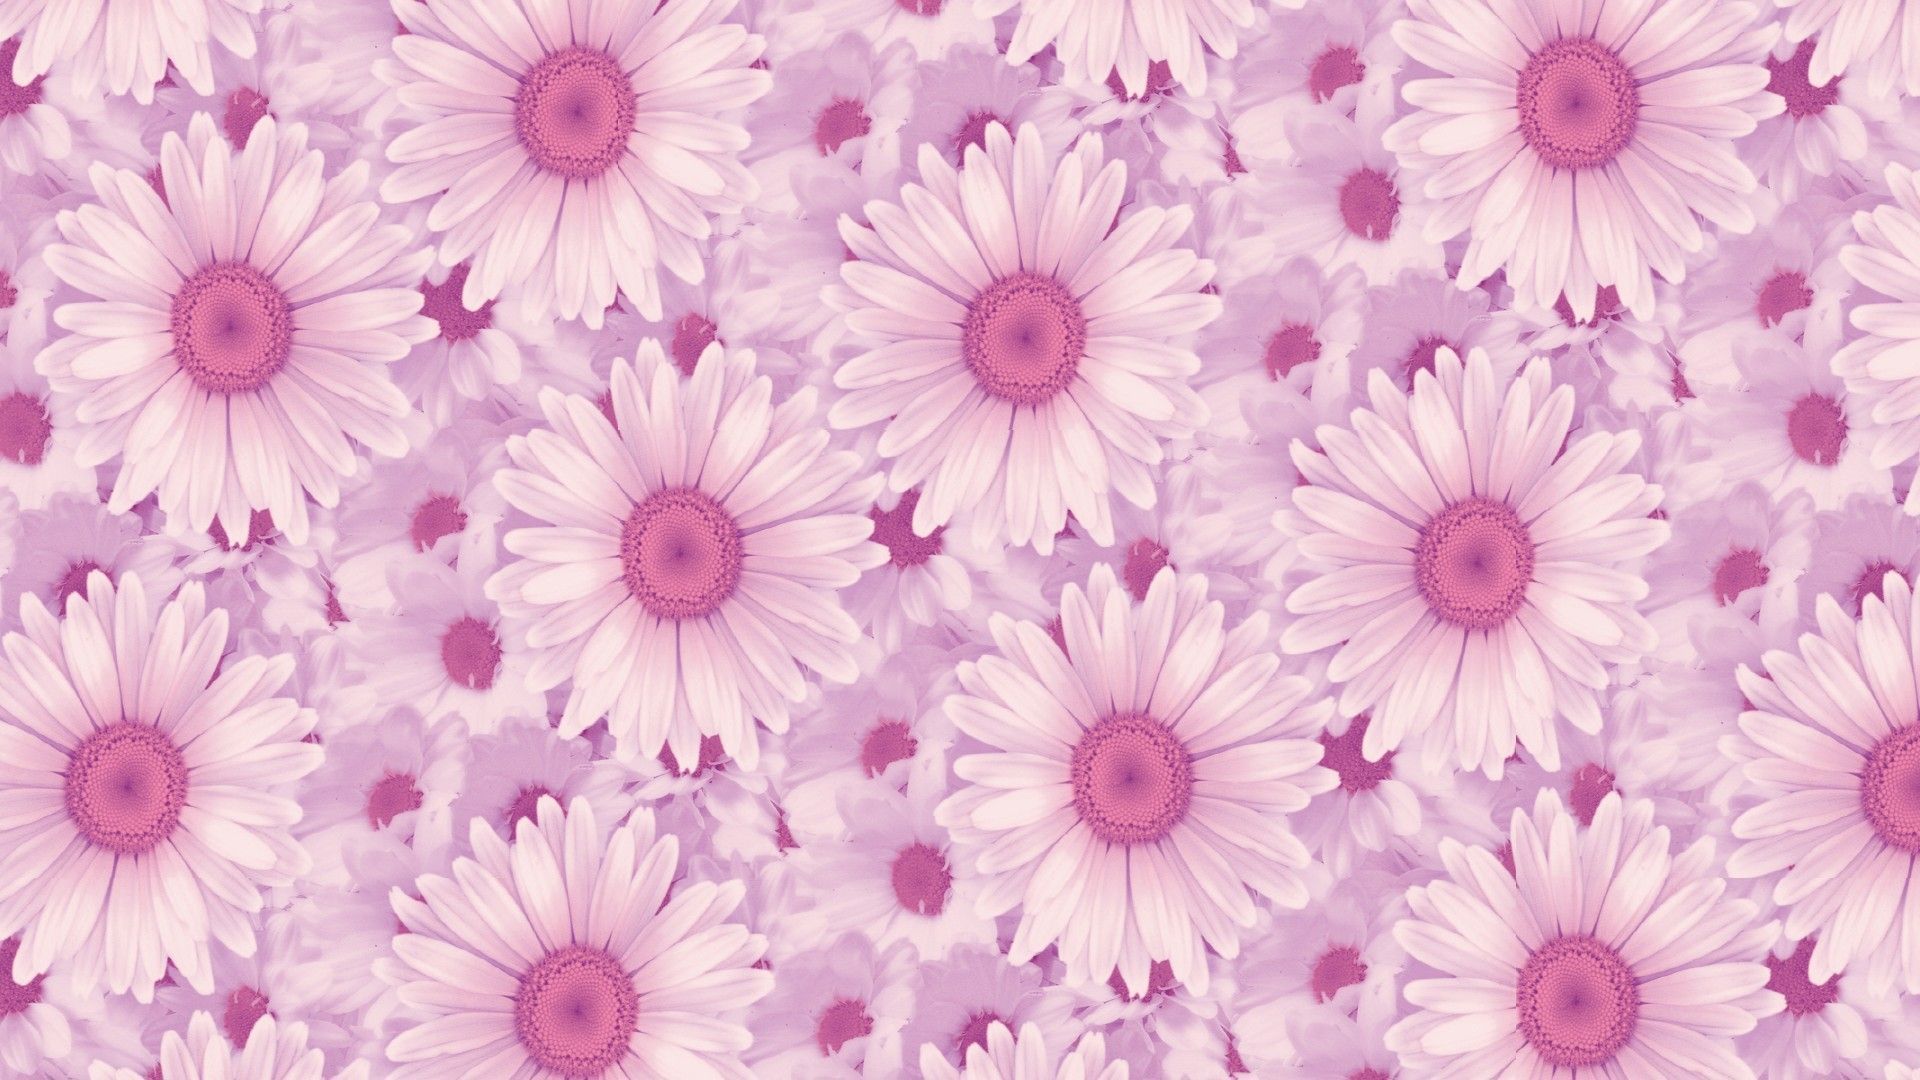 100+] Pink Aesthetic Tumblr Laptop Wallpapers